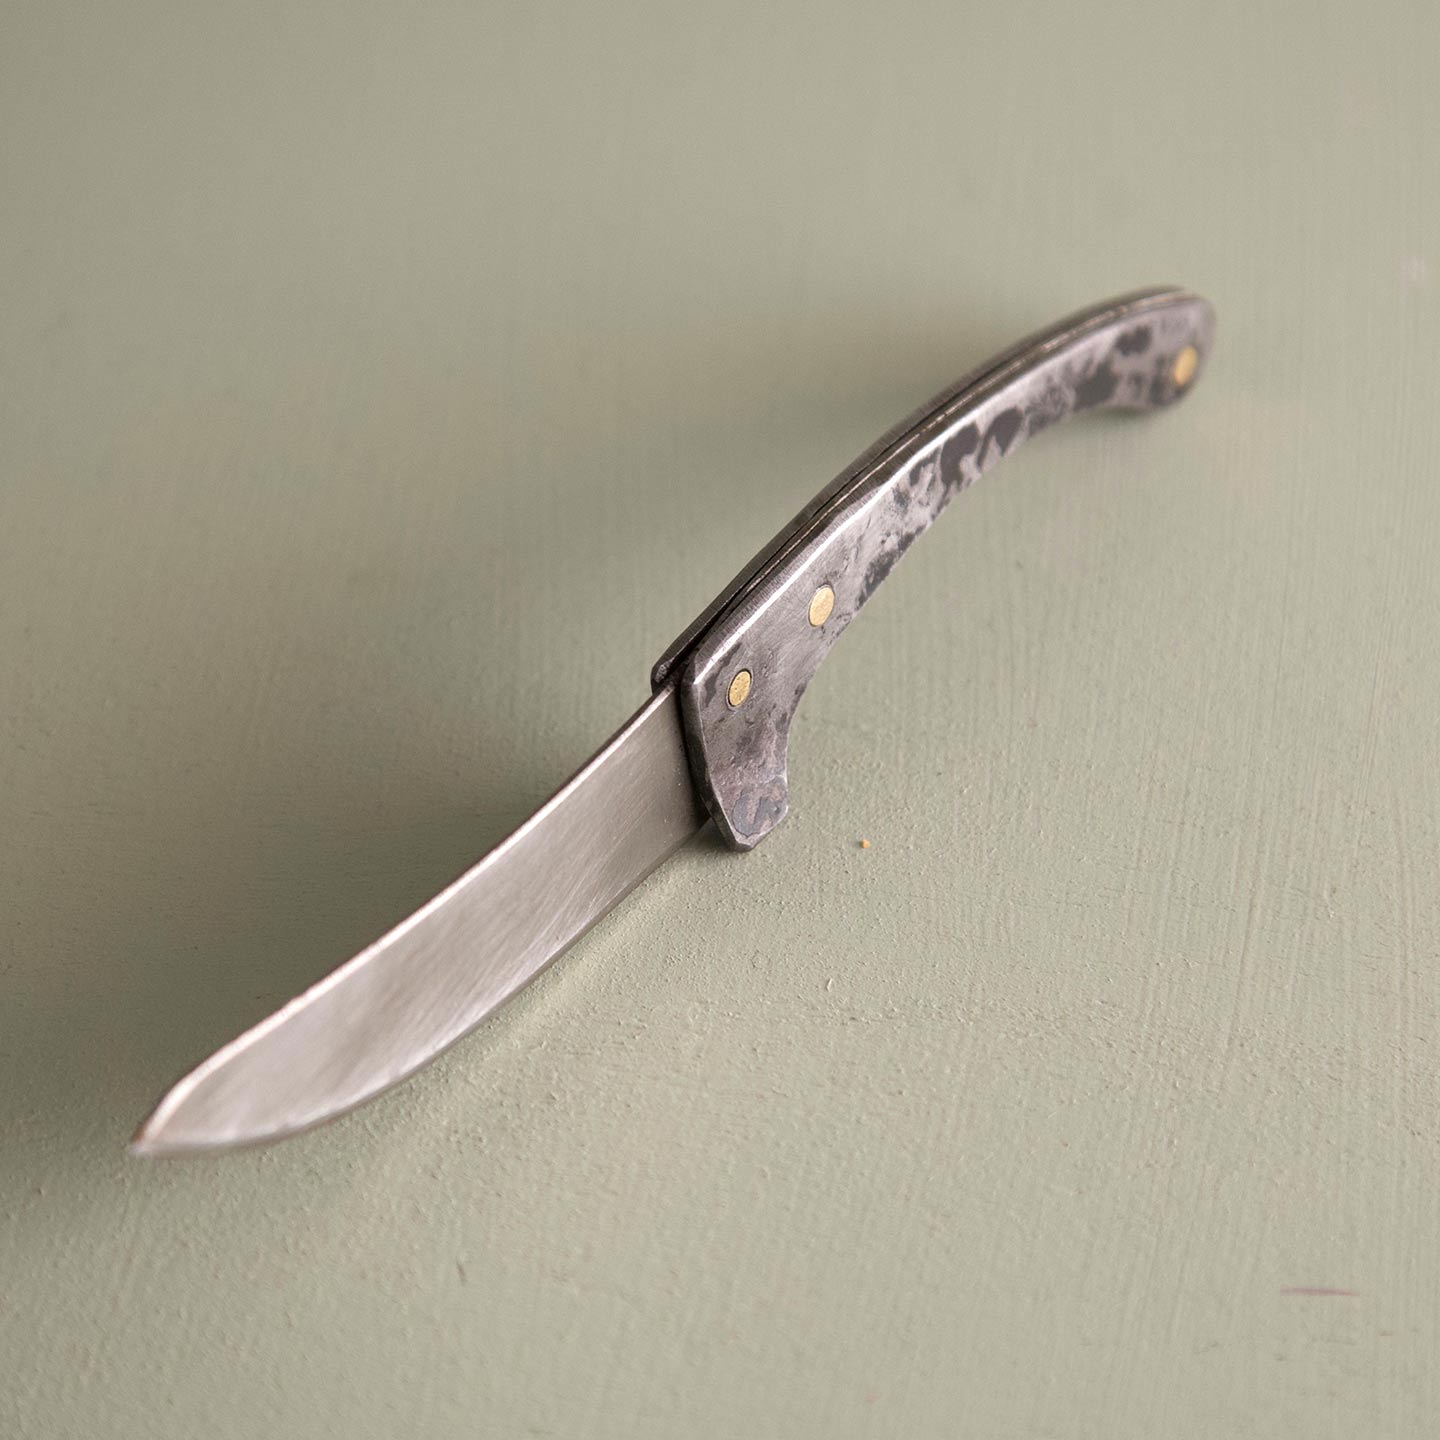 Forged Iron Handle Cheese Knife + sett – One Mercantile / Sett